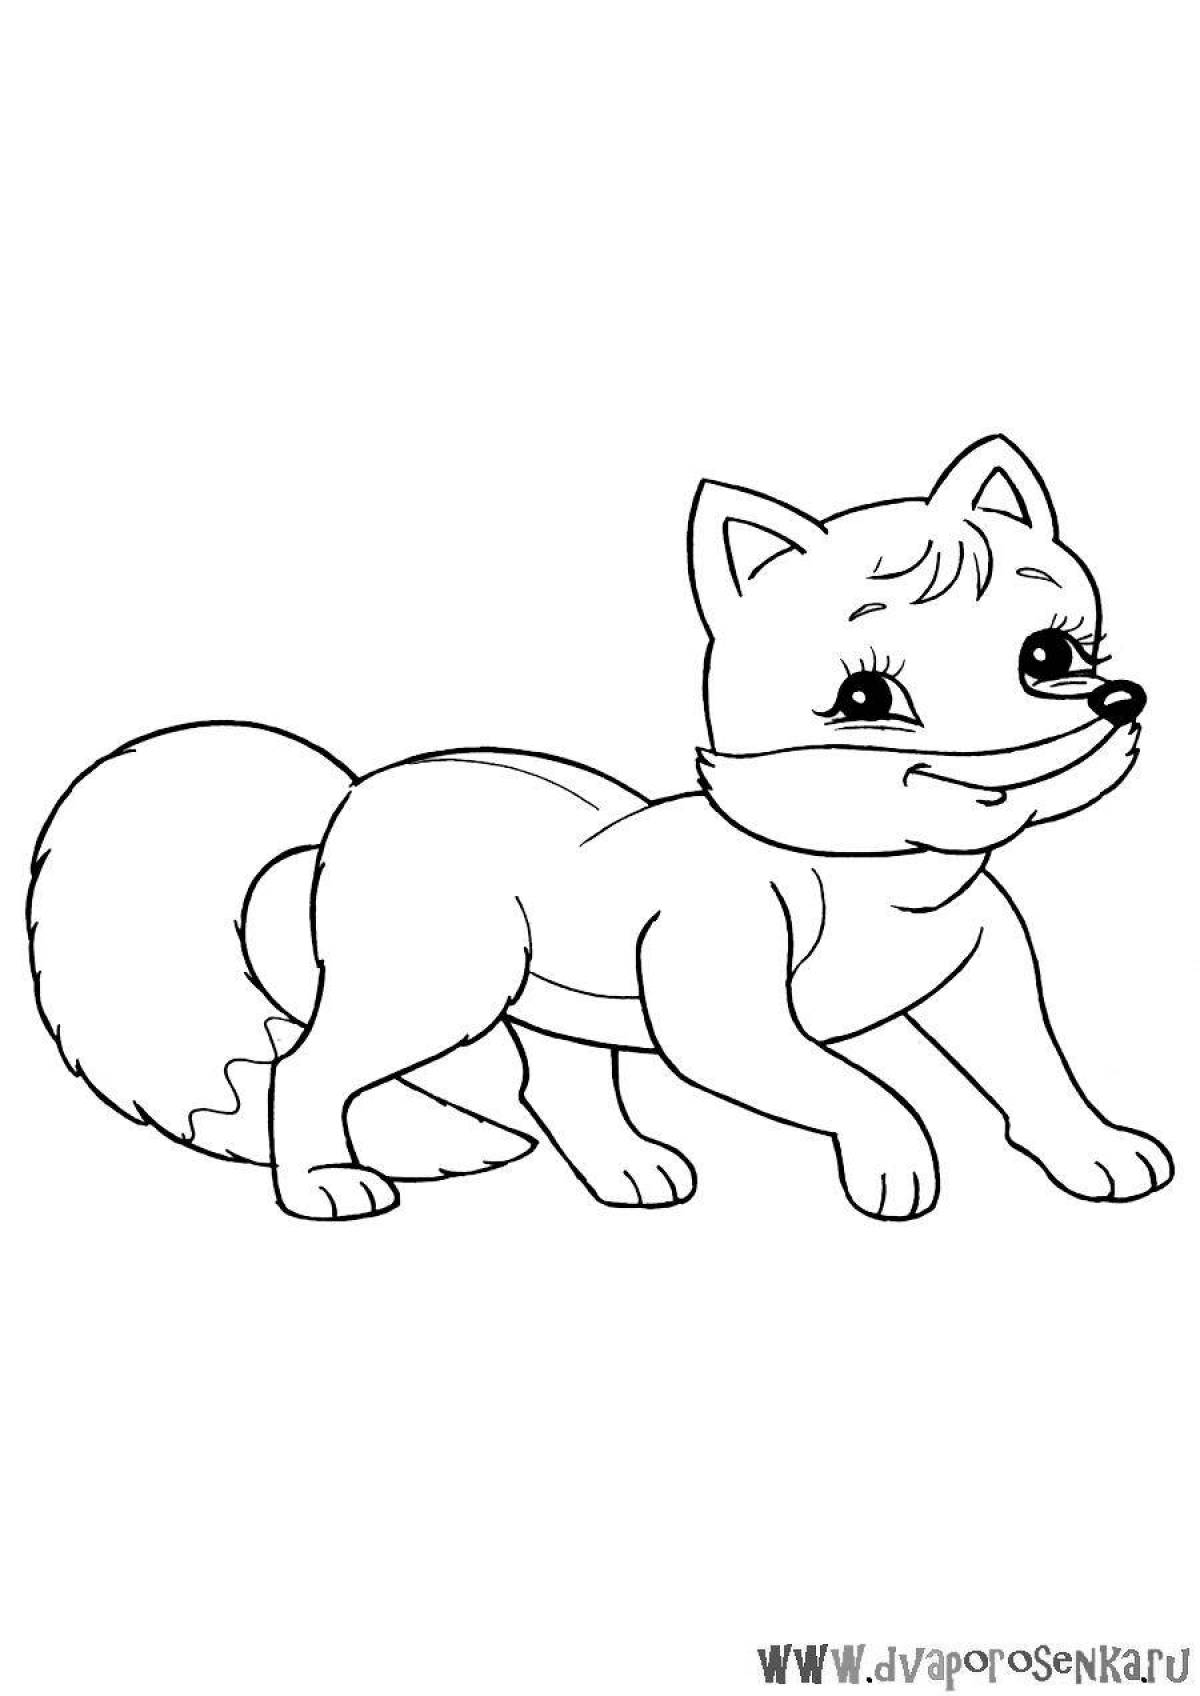 Children's fox coloring book